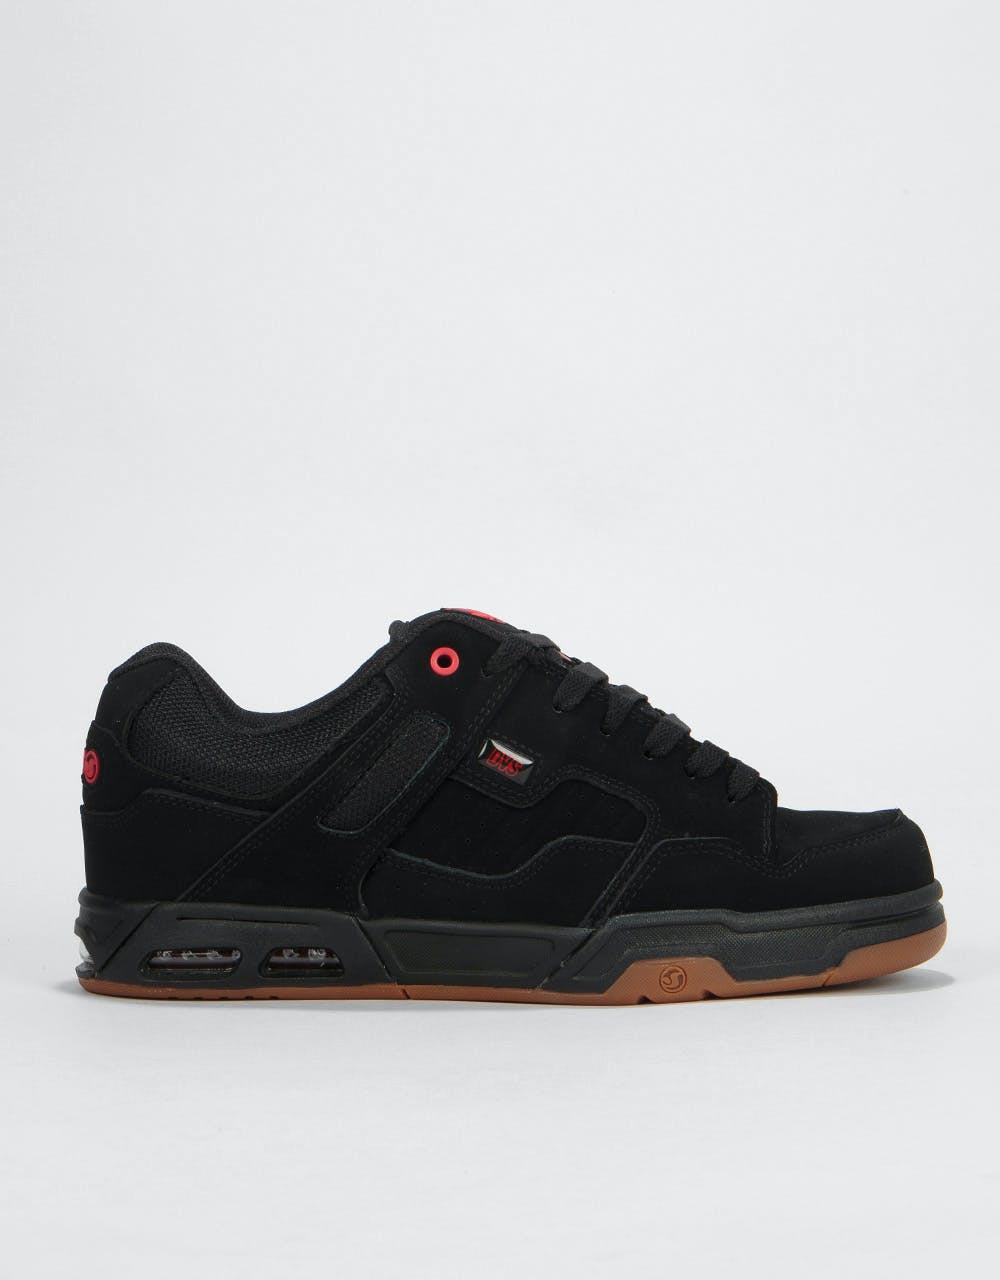 DVS Enduro Heir Skate Shoes - Black/Red/Gum Nubuck